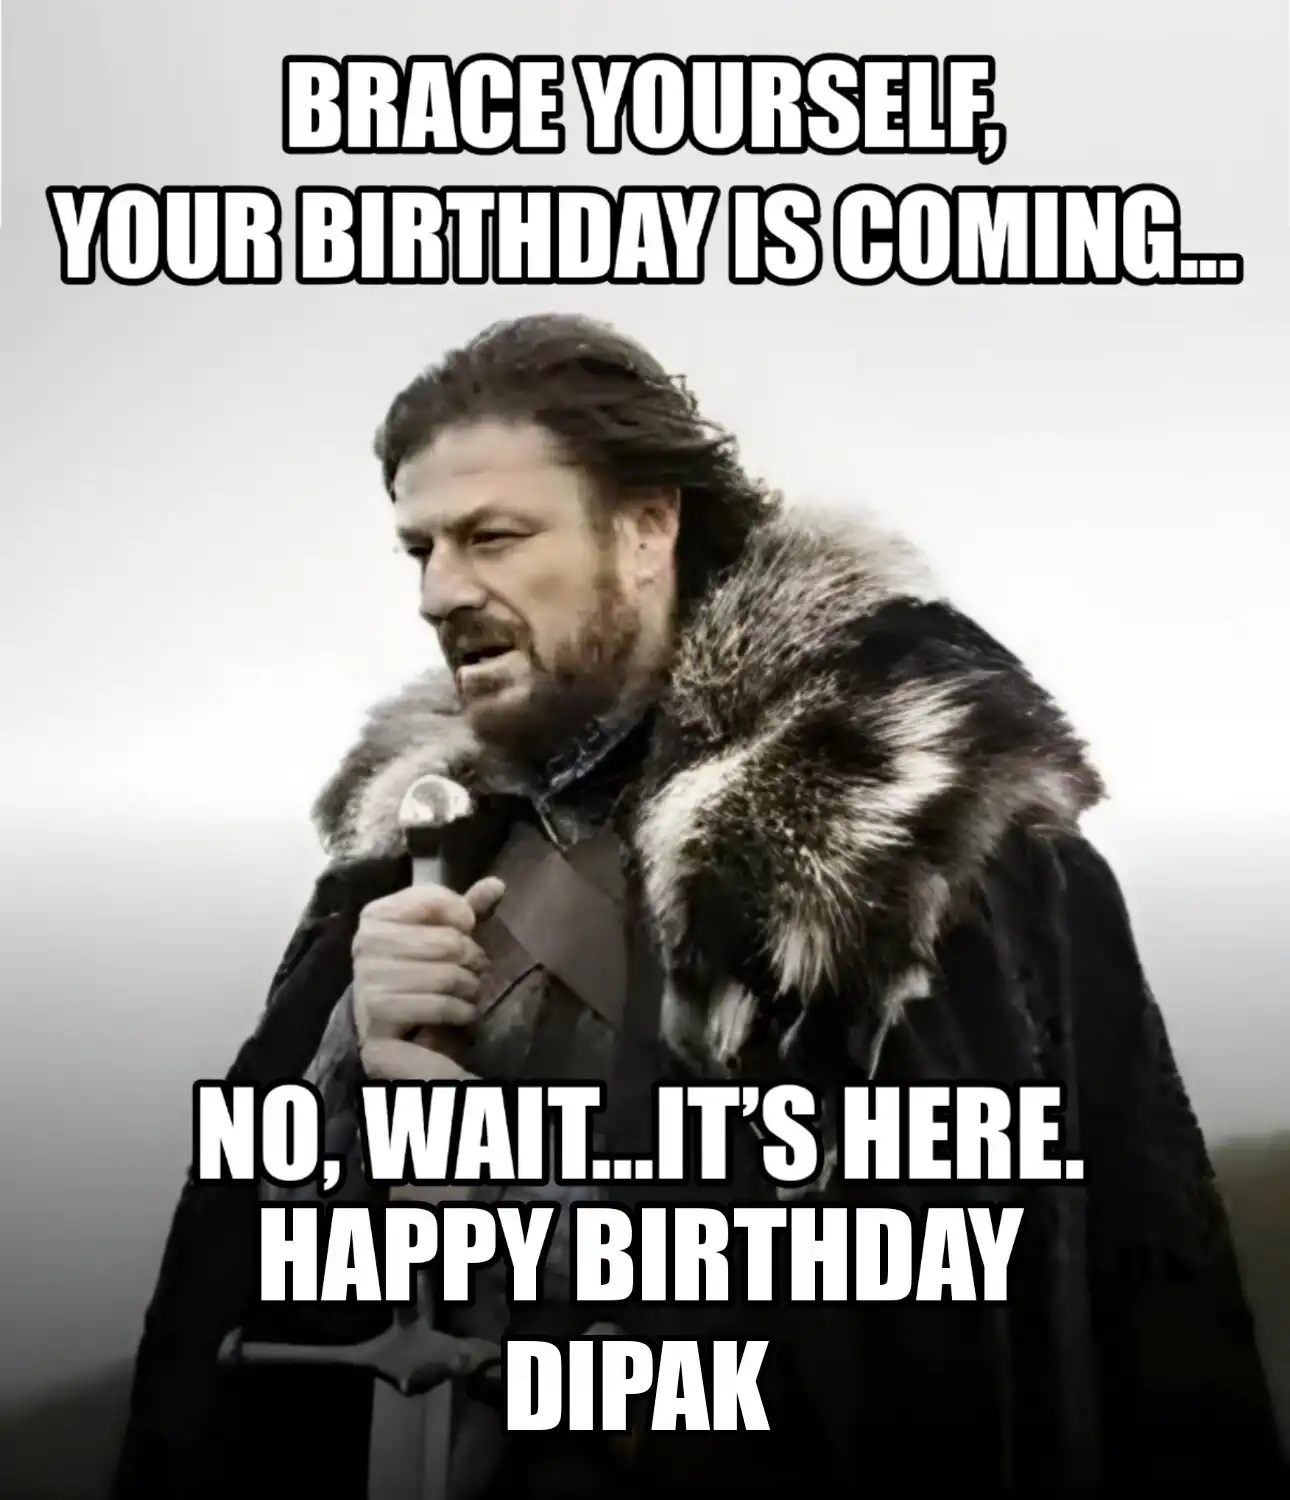 Happy Birthday Dipak Brace Yourself Your Birthday Is Coming Meme